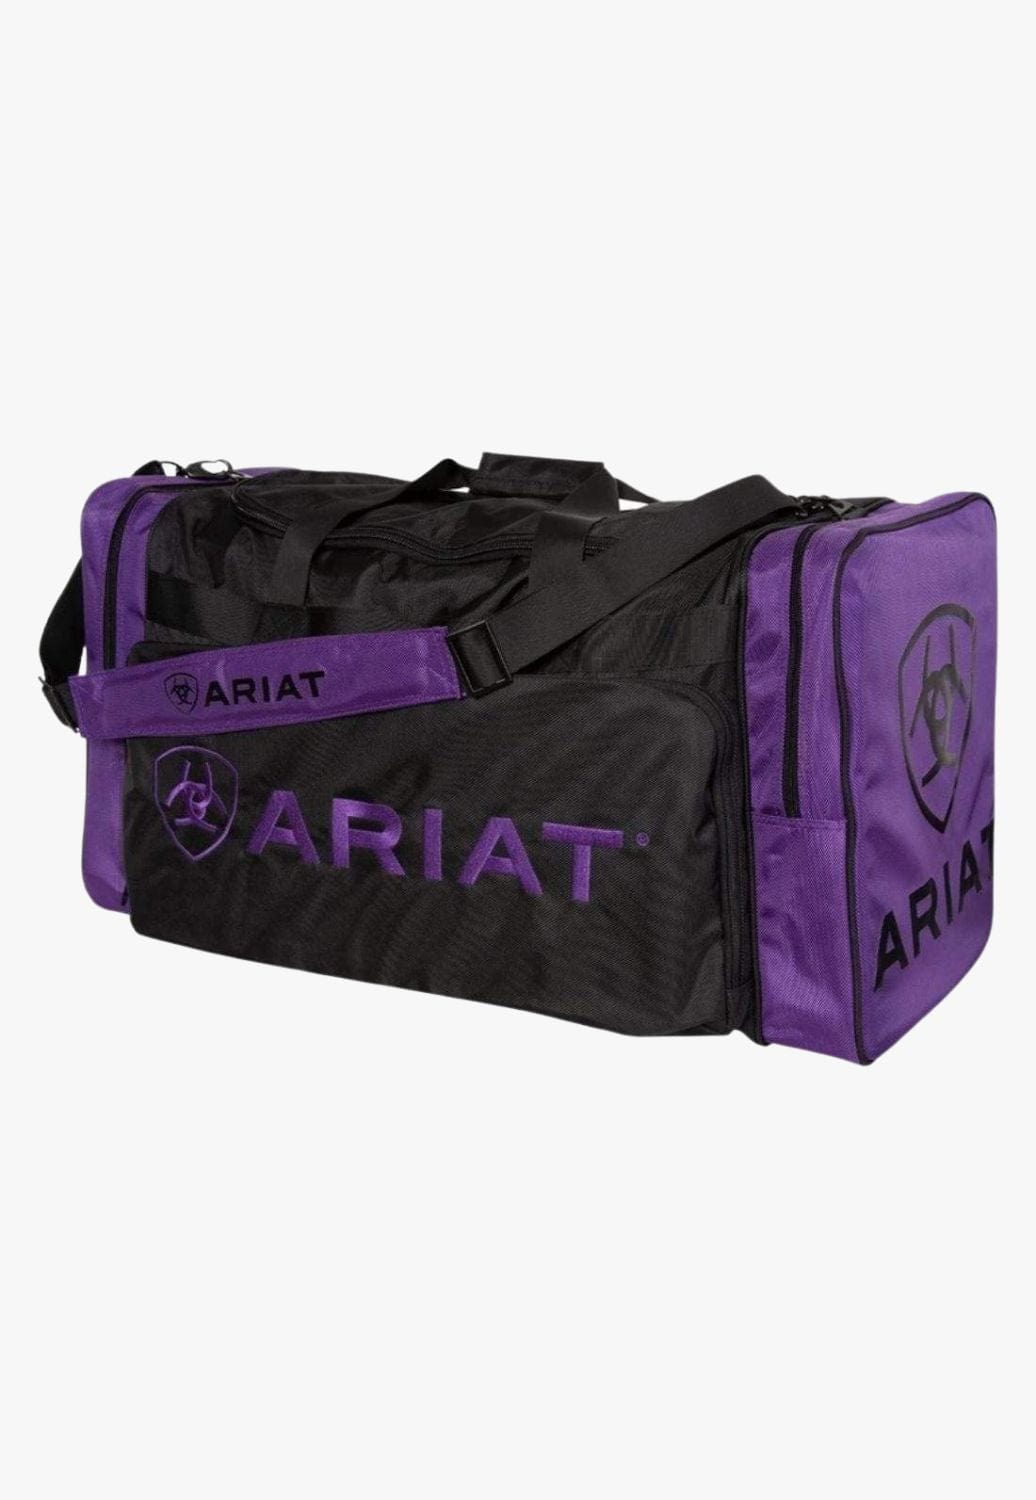 Ariat TRAVEL - Travel Bags Purple/Black Ariat Gear Bag